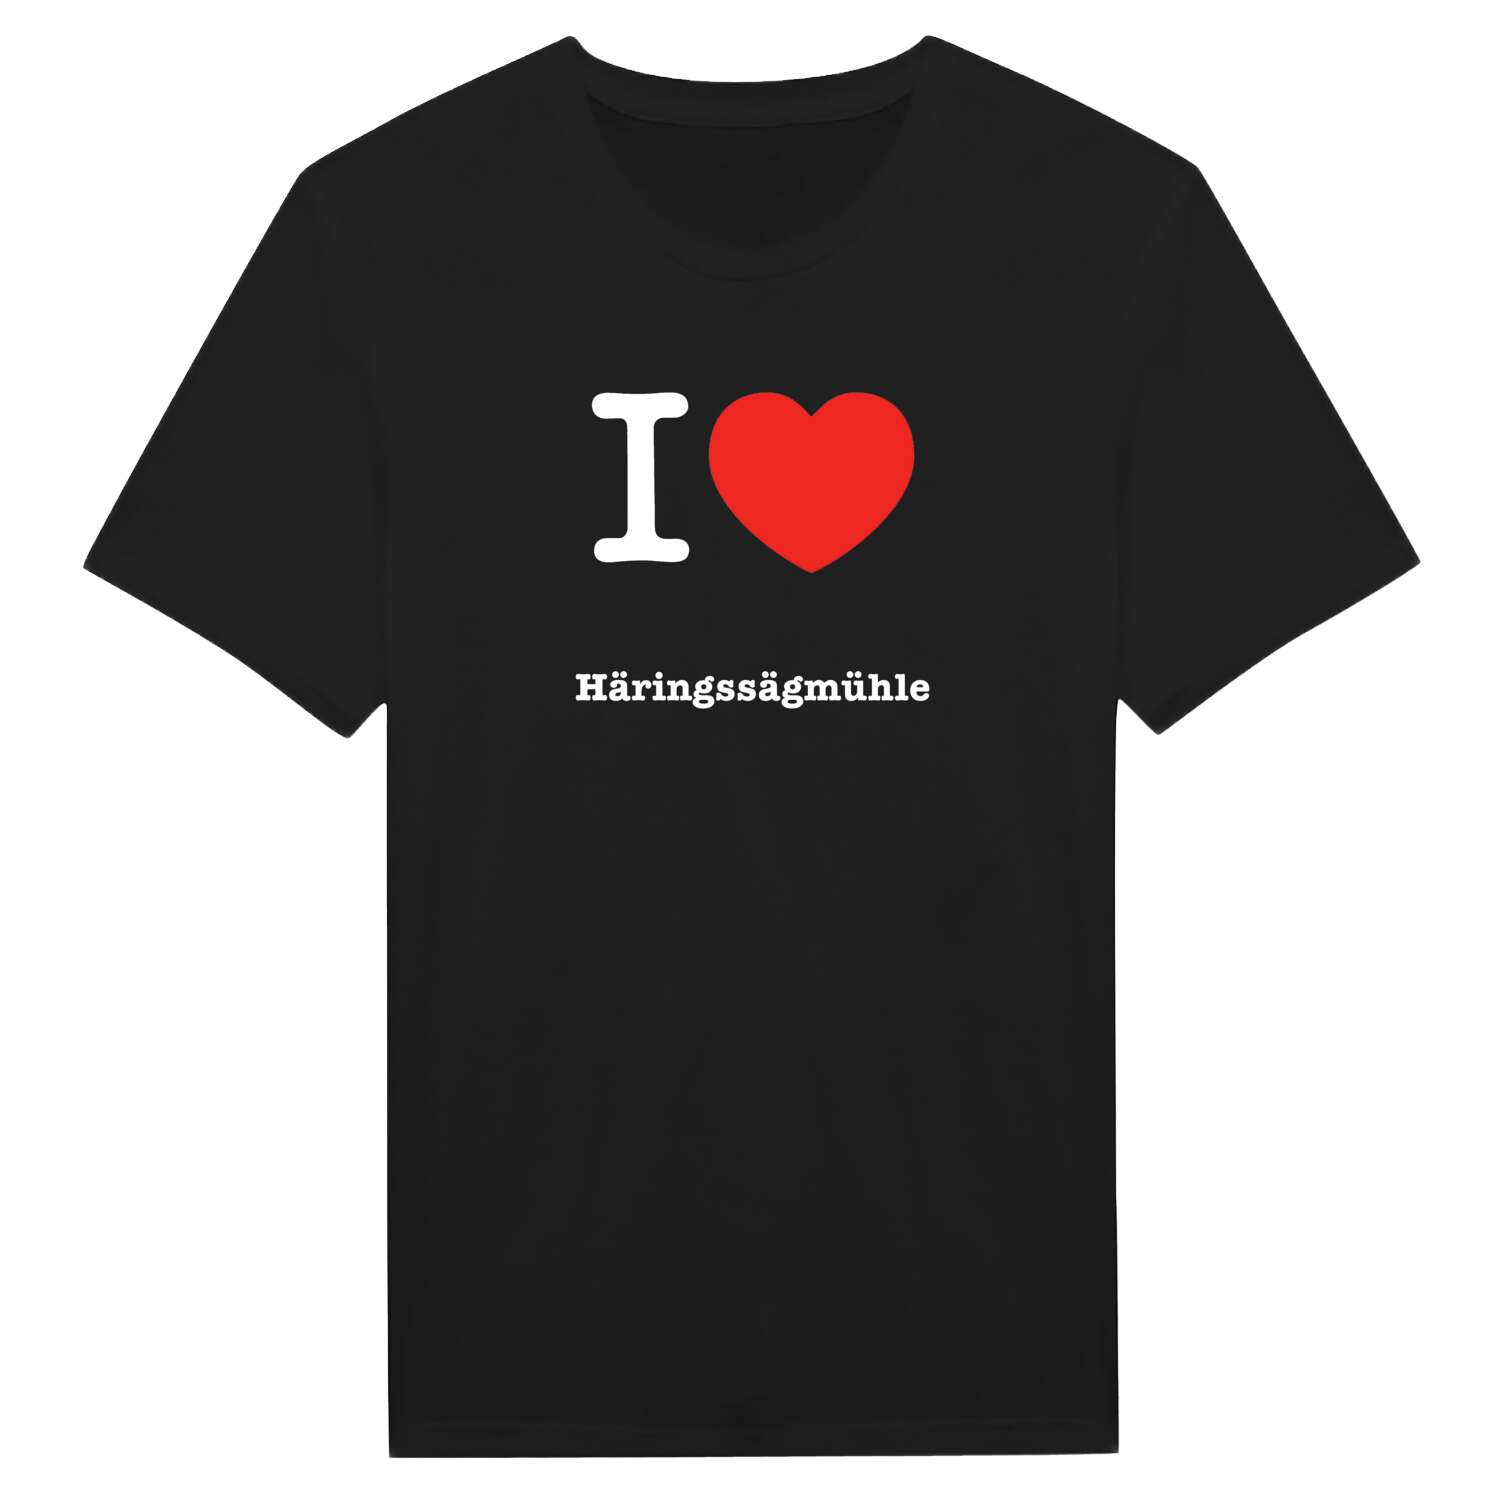 Häringssägmühle T-Shirt »I love«